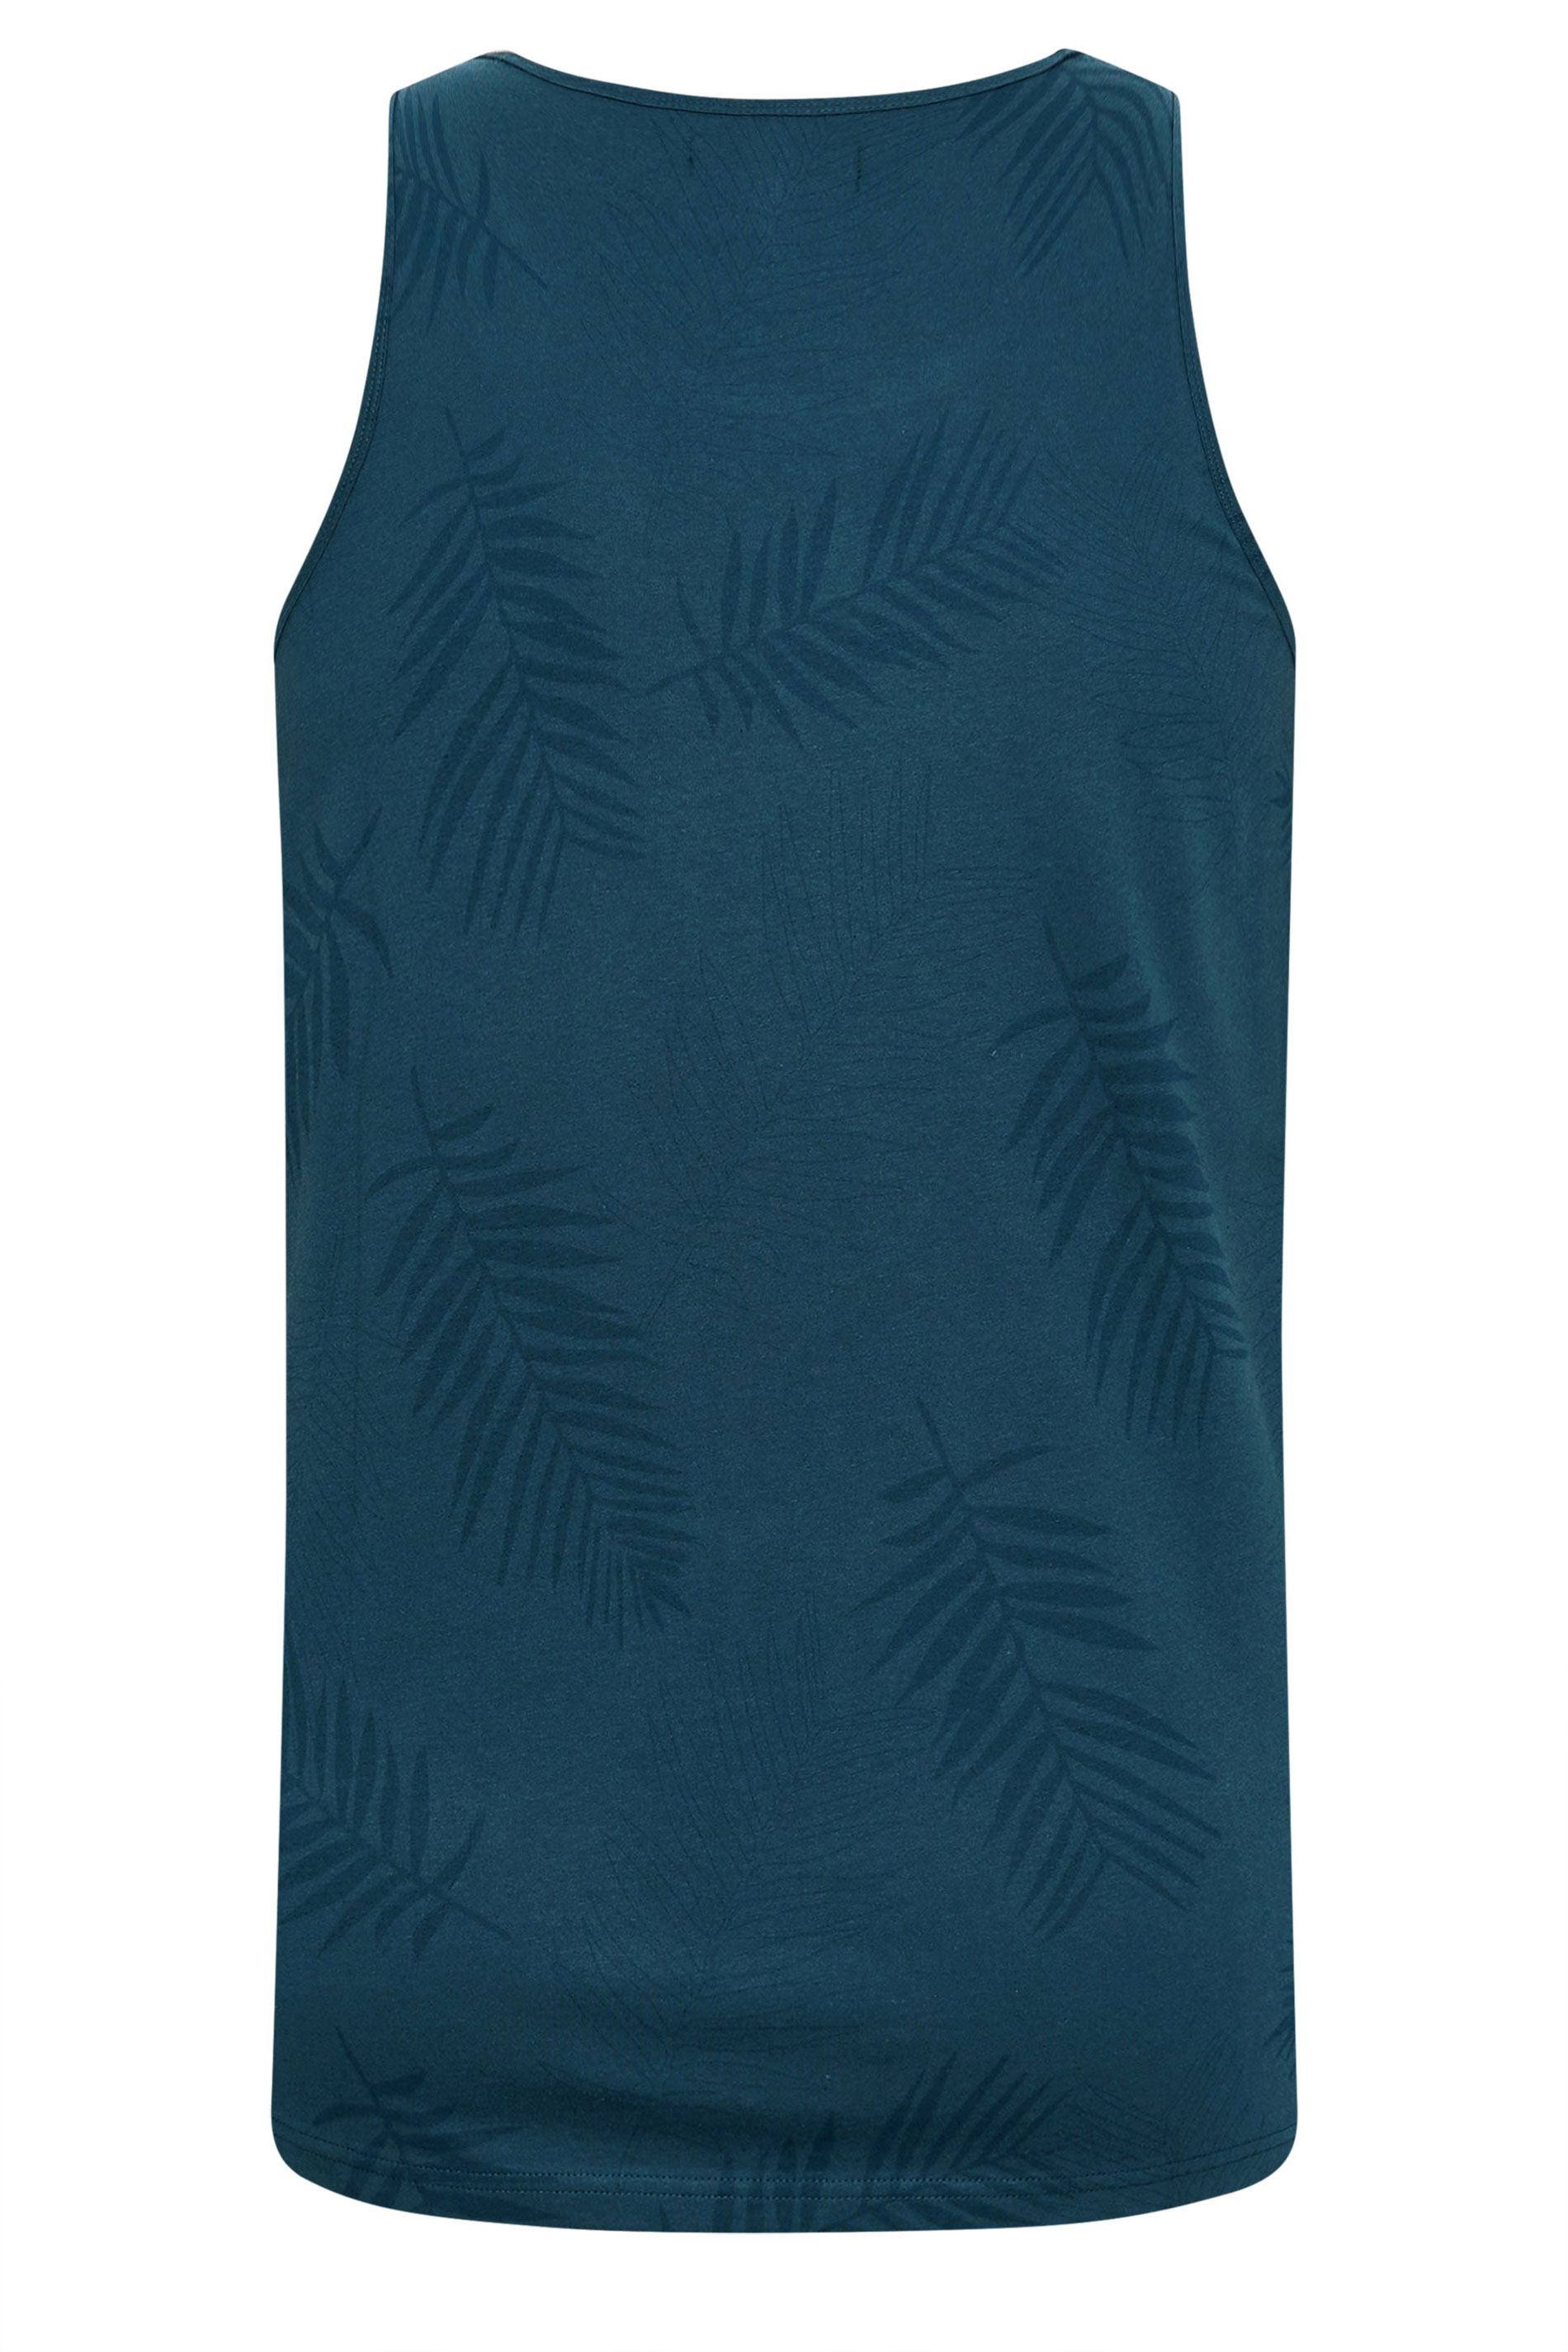 BadRhino Big & Tall Navy Blue Print Vest Top | BadRhino 2